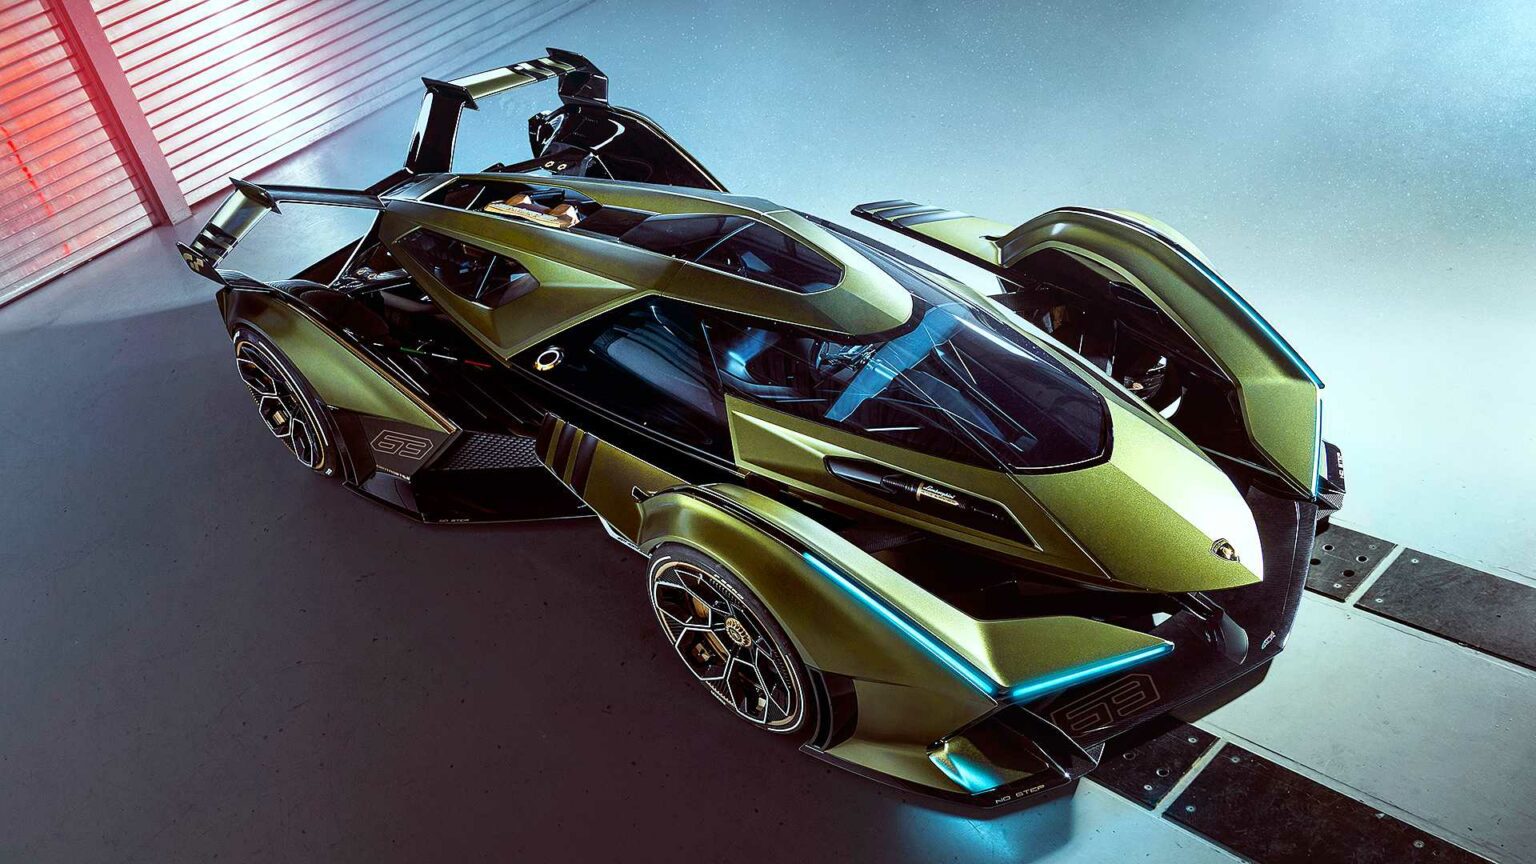 Lamborghini Unveils the V12 Vision Gran Turismo Concept